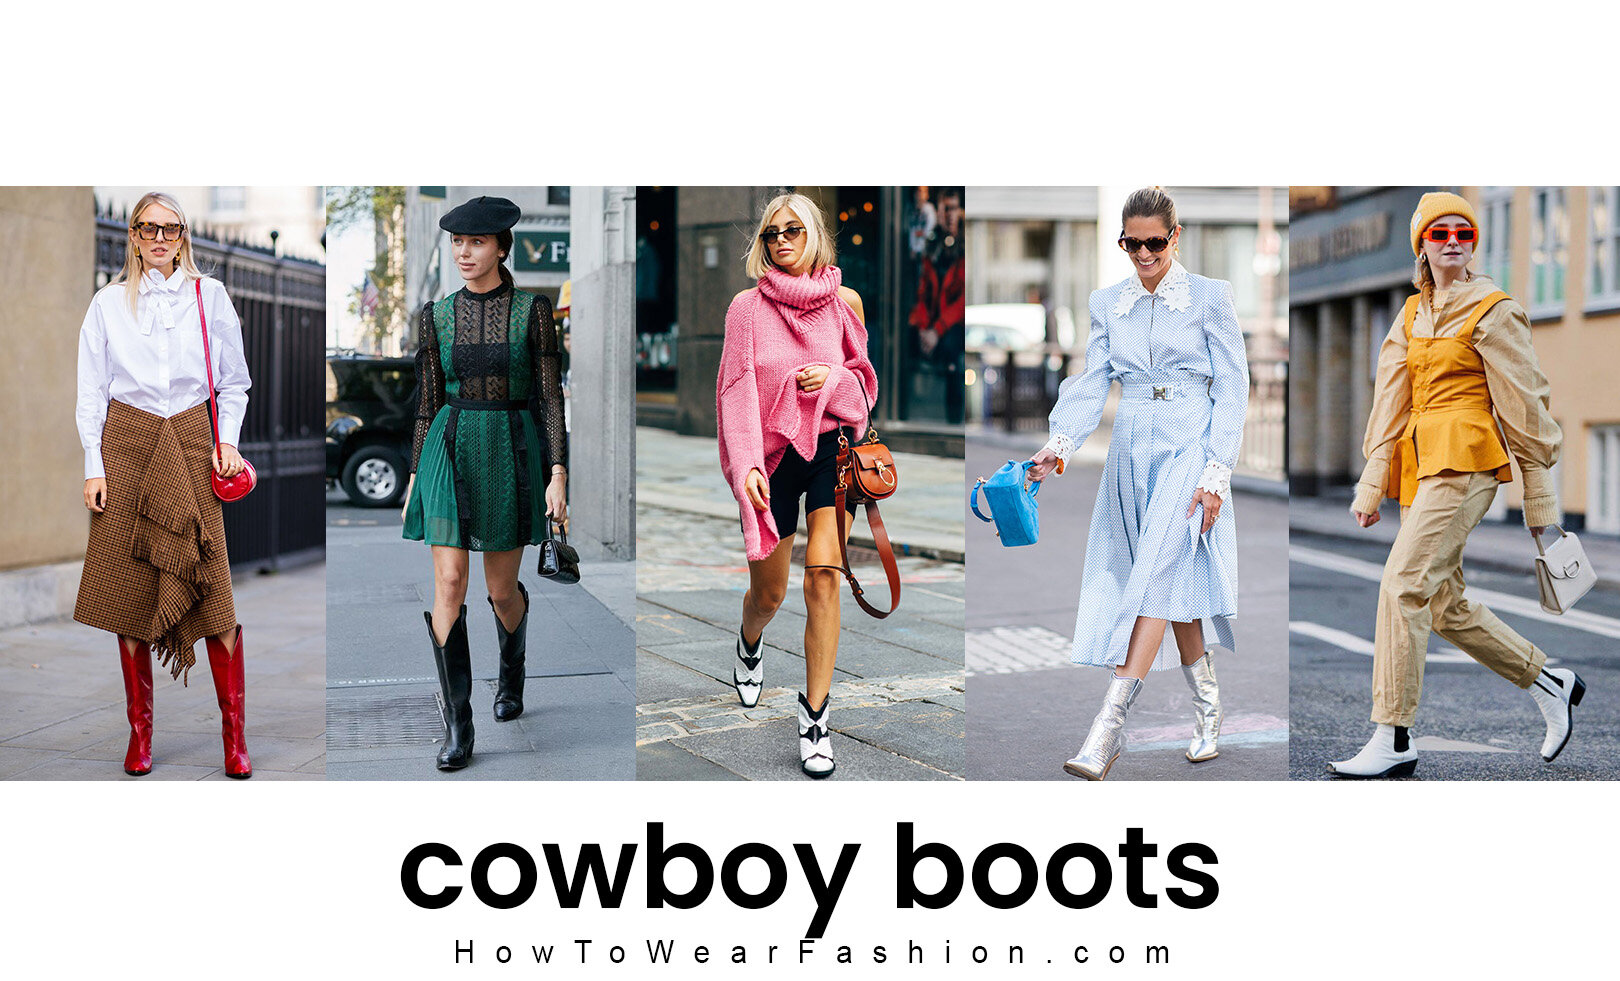 10 Ways to Wear Cowboy Boots